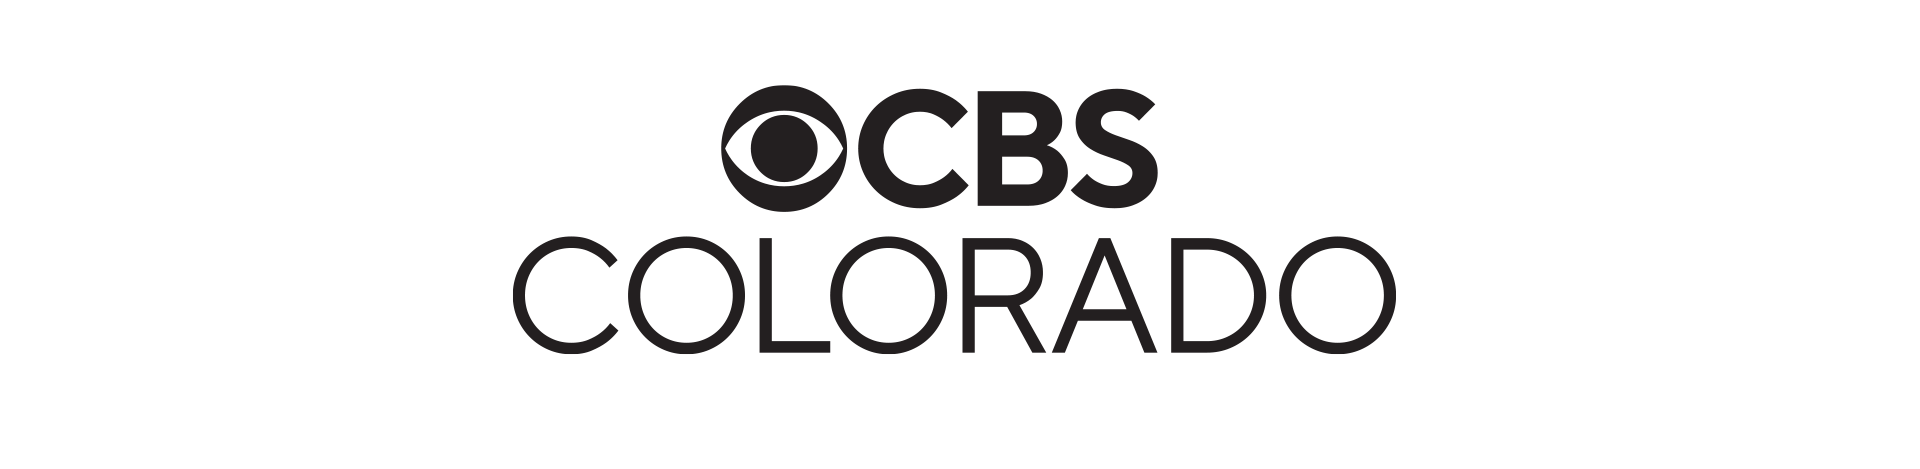 2023 CBS Colorado logo